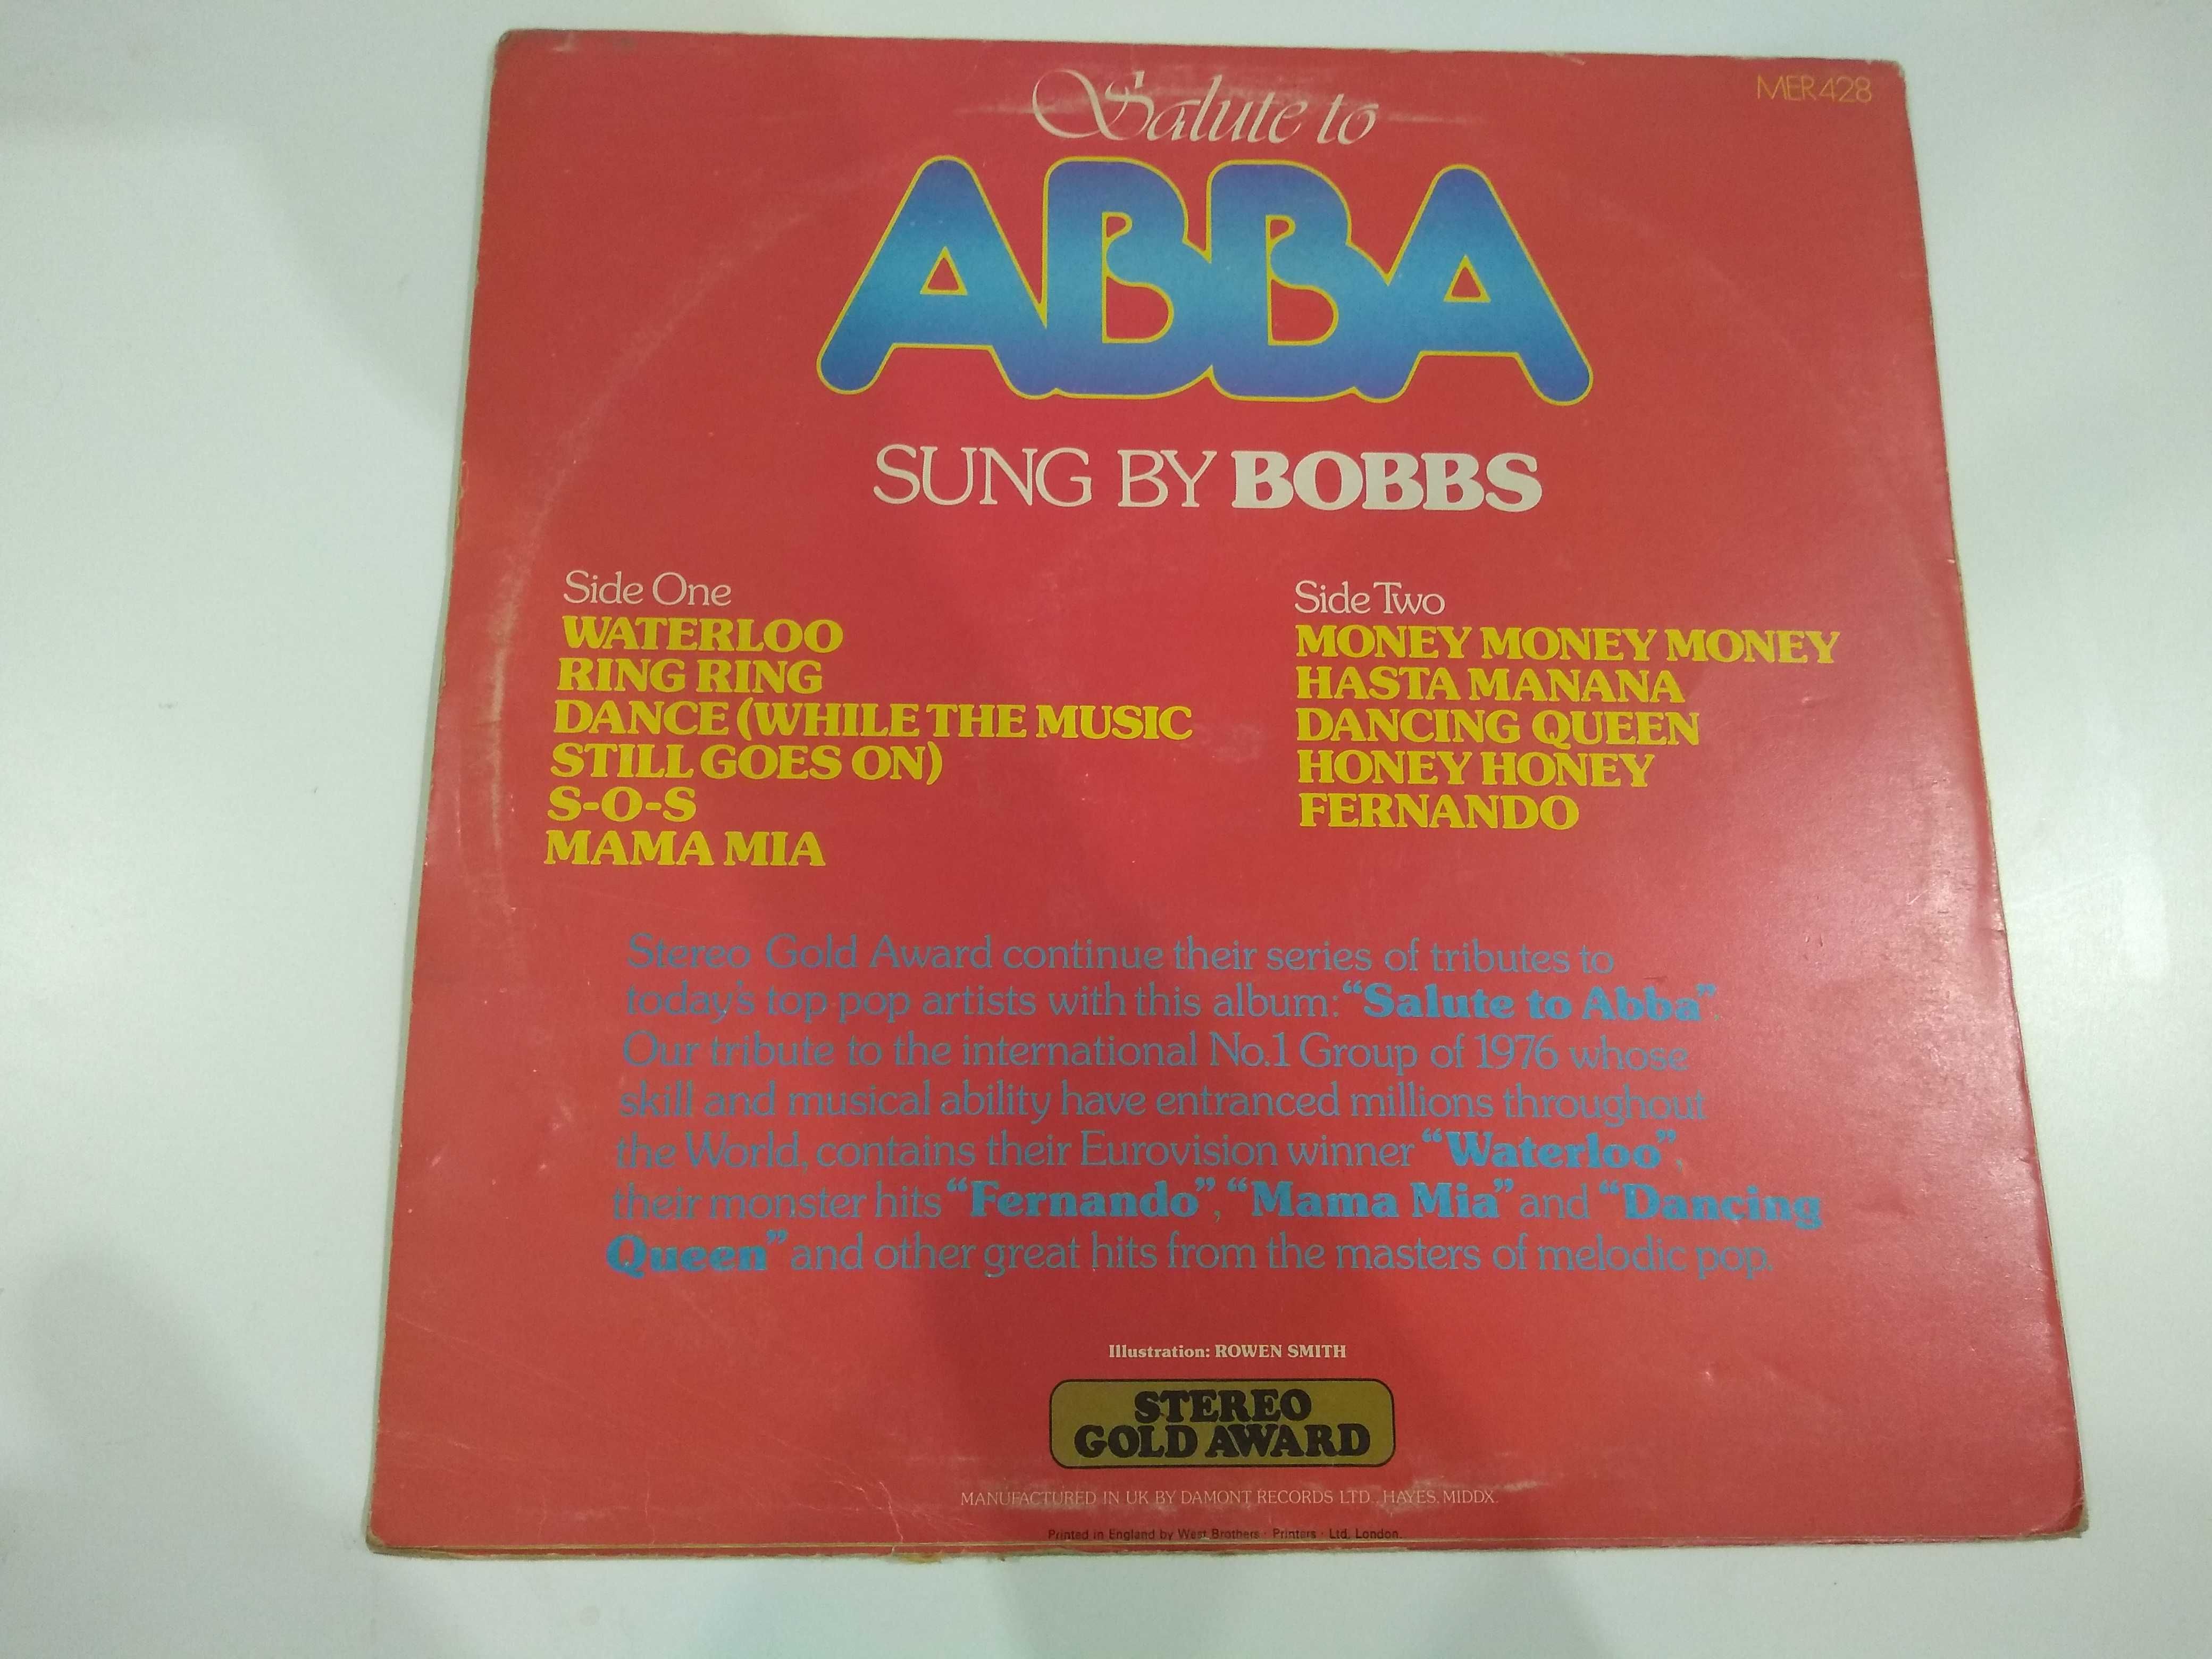 Dobra płyta - ABBA sung by bobbs